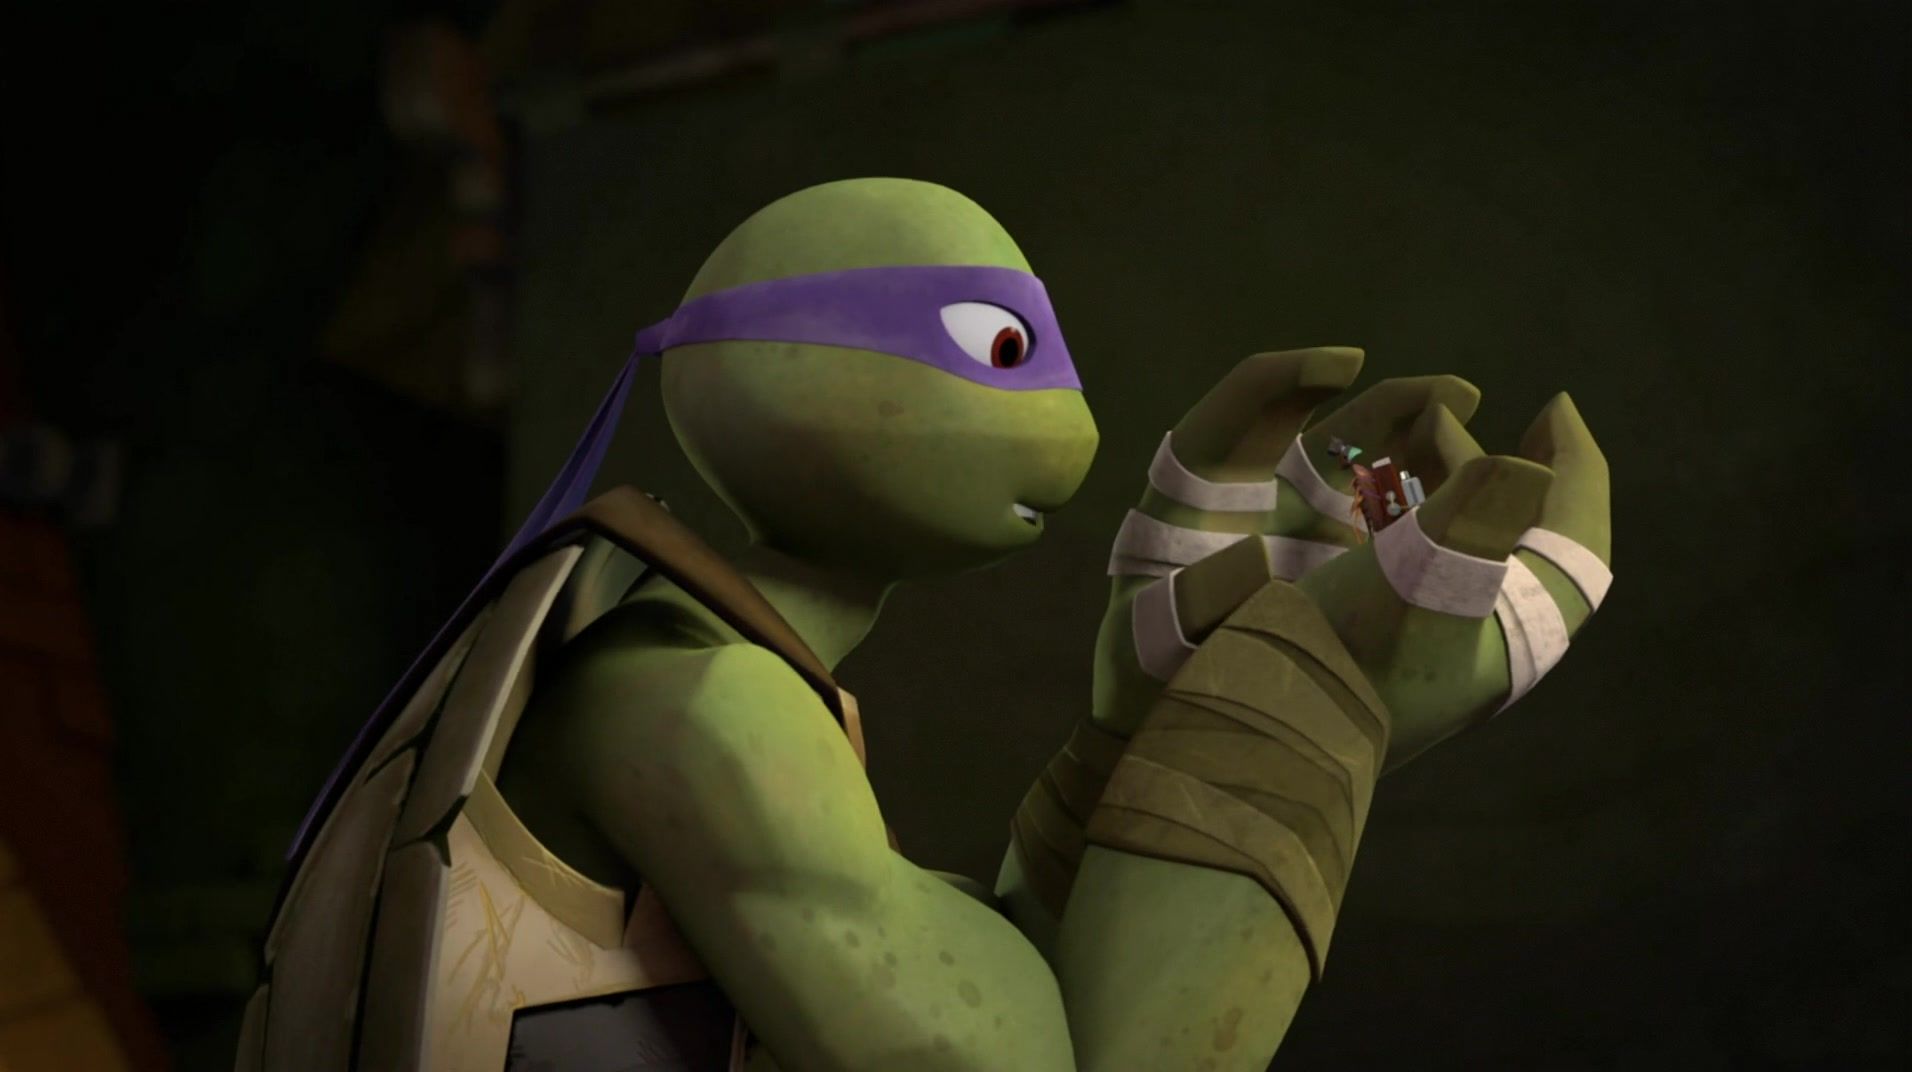 Teenage Mutant Ninja Turtles (2012) Season 1 Image, Screencaps, Screenshots, Wallpaper, And Picture